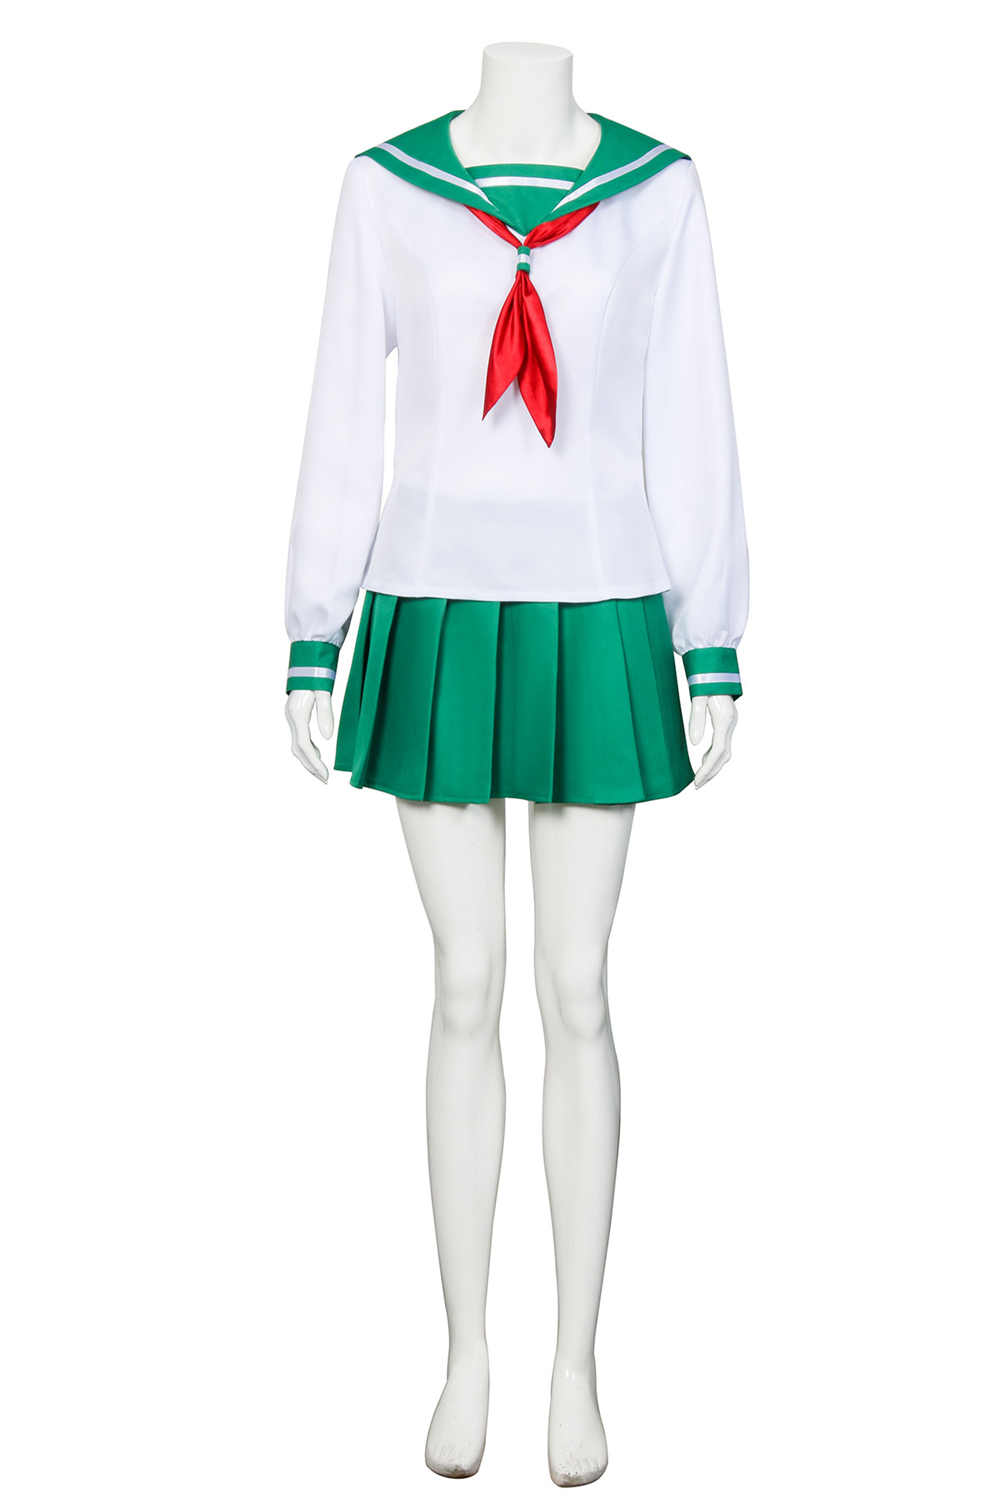 Anime InuYasha Kagome Higurashi Women Girls Uniform Lolita  Skirt Outfit Halloween Carnival Cosplay Costume Sailor Suit-Takerlama